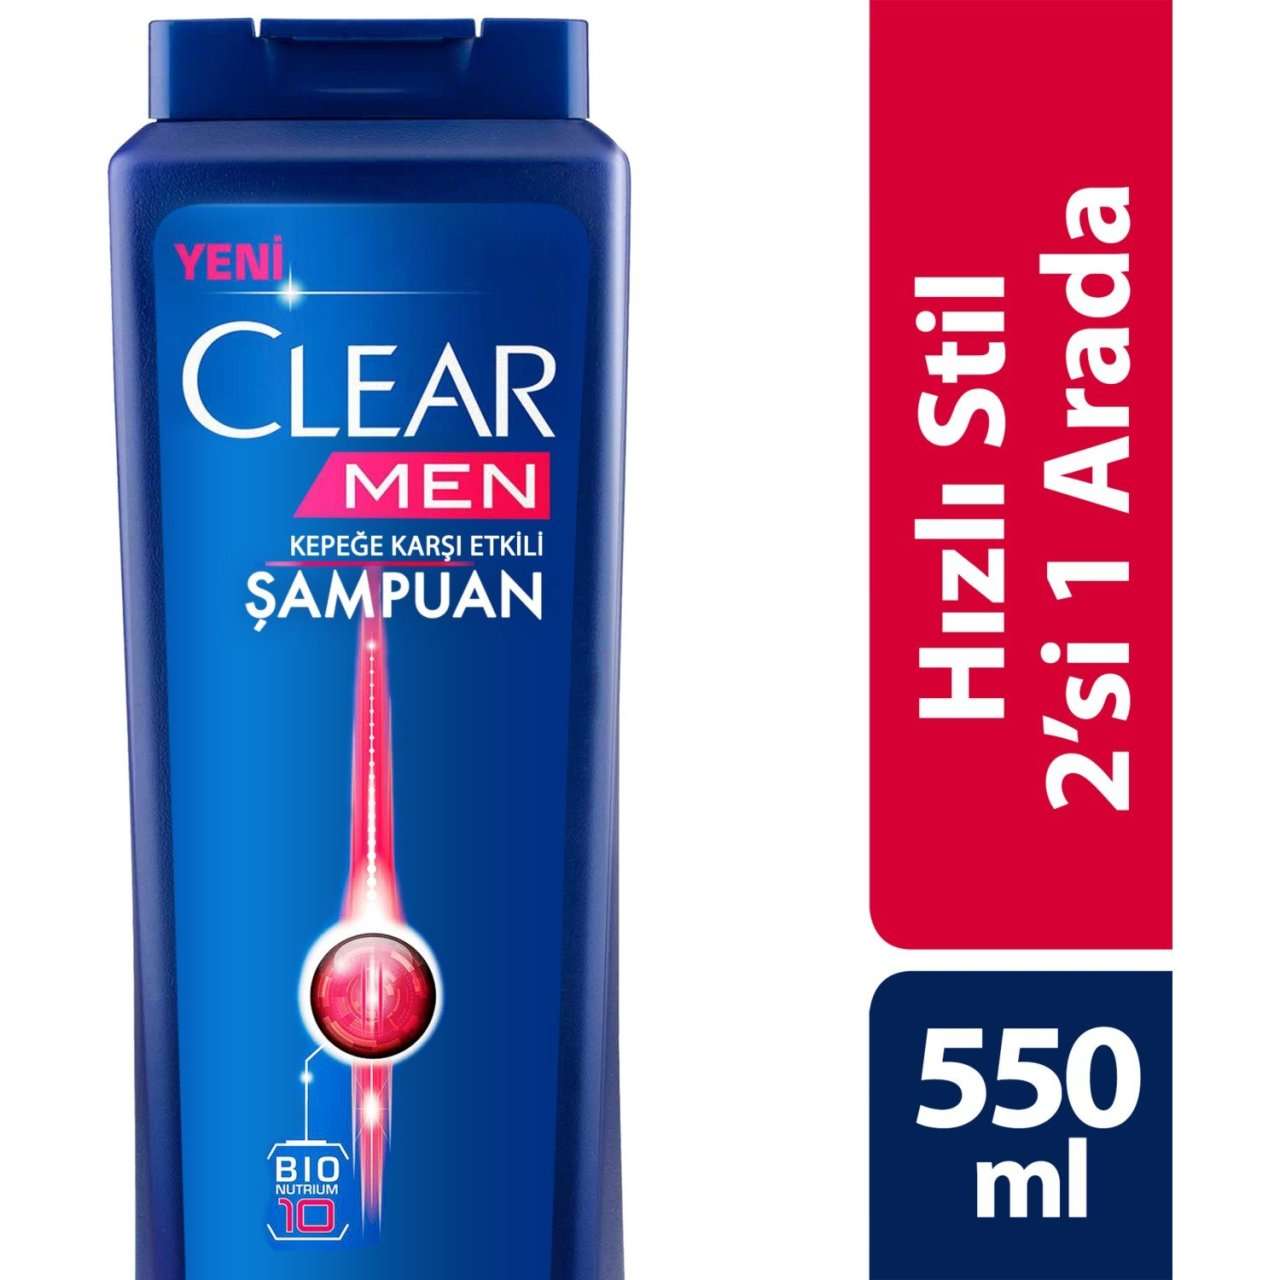 Clear Men Şampuan Hızlı Stil 2 si 1 Arada 550 ML